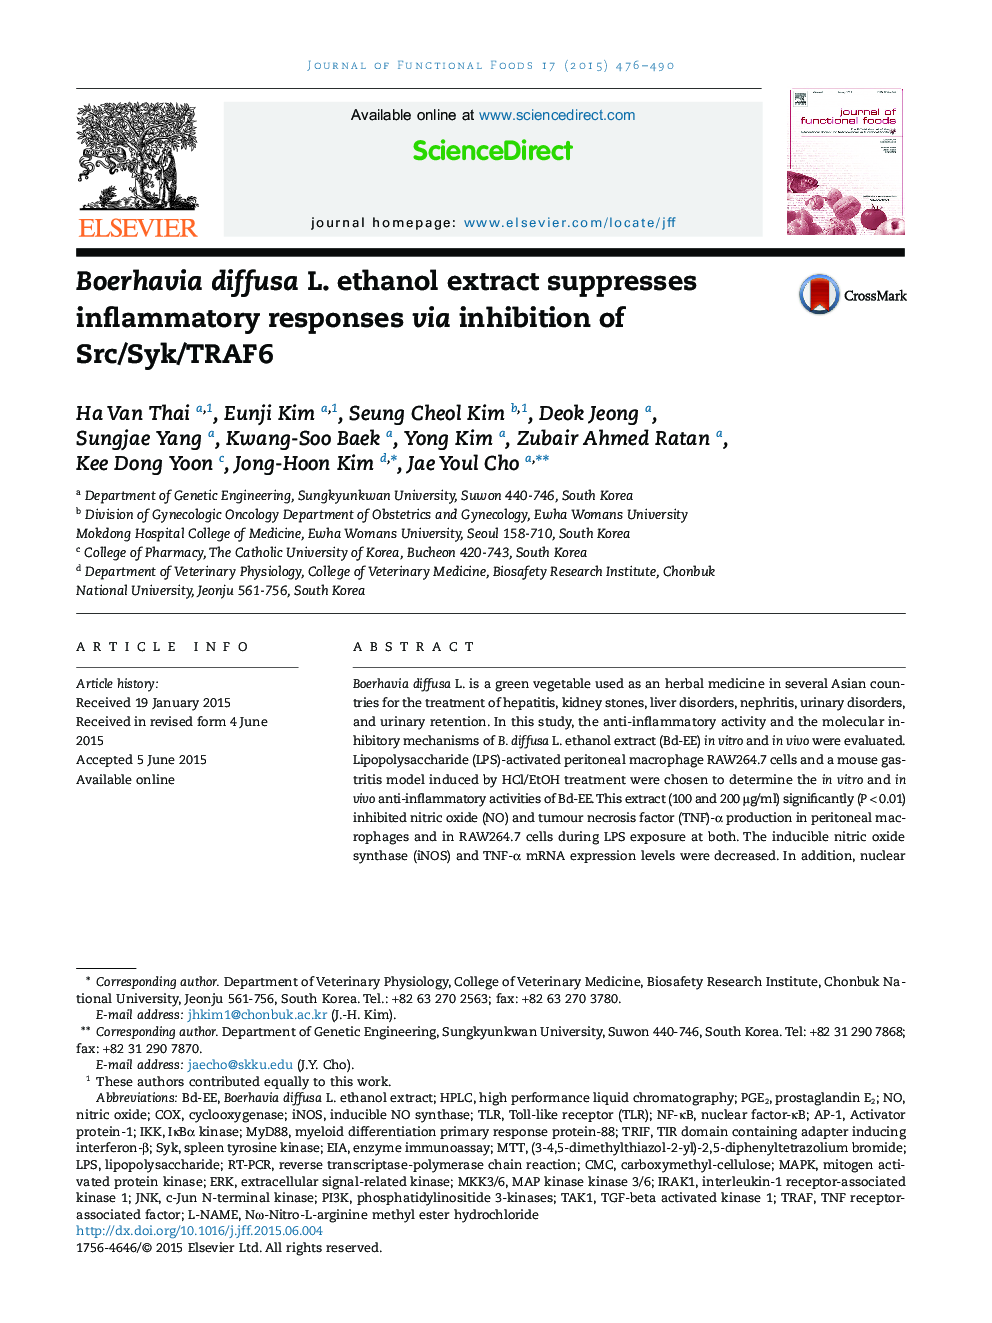 Boerhavia diffusa L. ethanol extract suppresses inflammatory responses via inhibition of Src/Syk/TRAF6